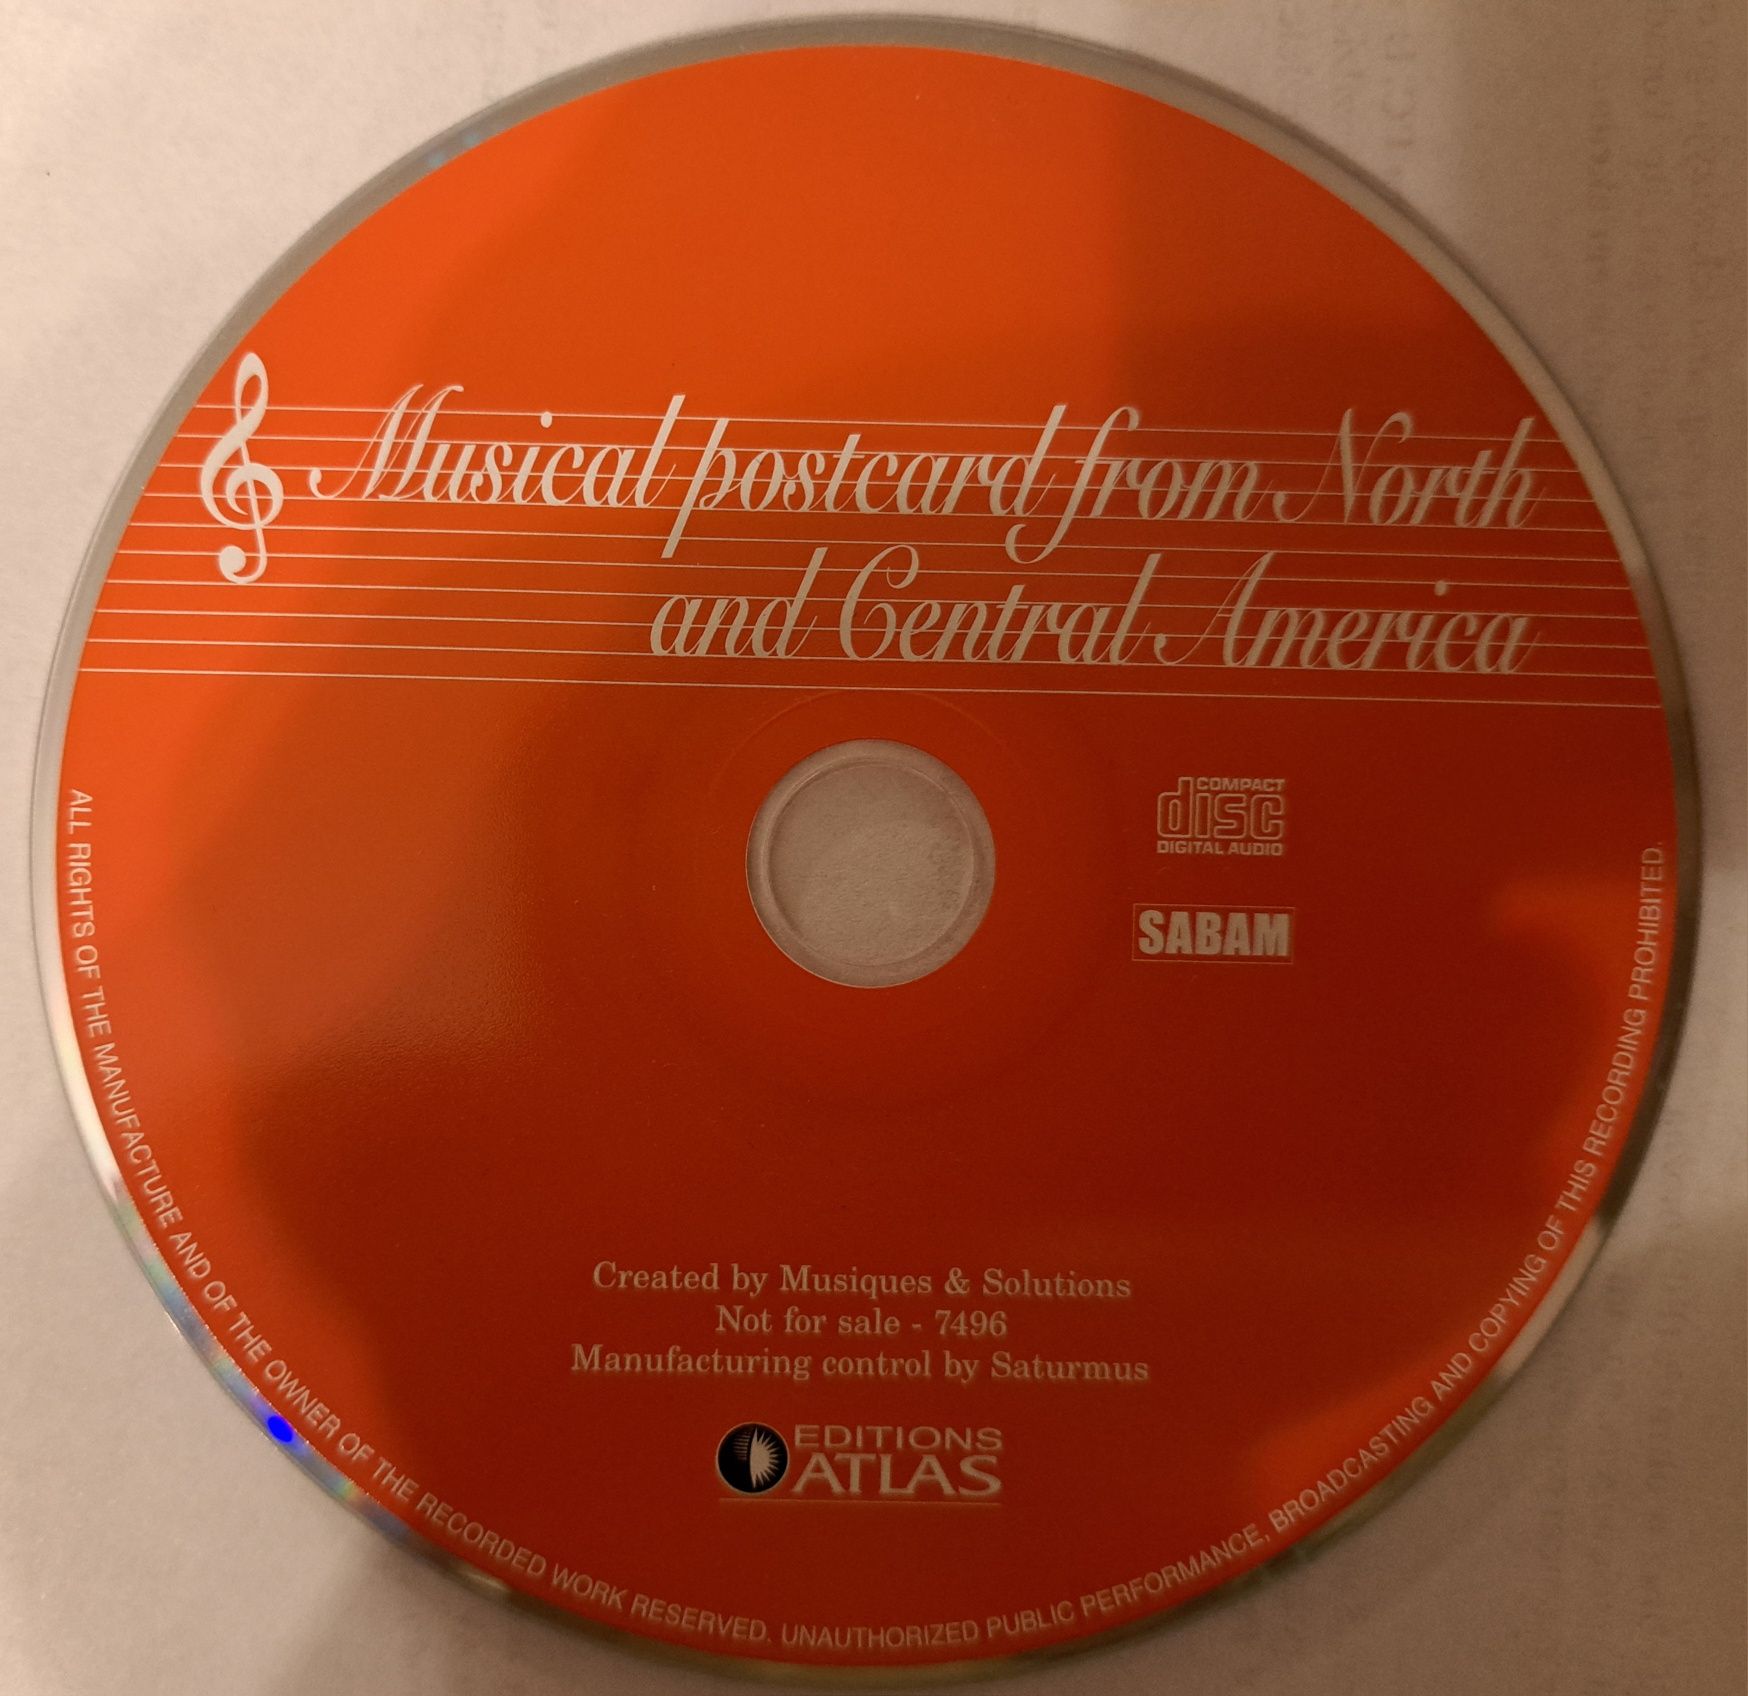 Musical Postcard from North And Central America - 5 Utworów – Płyta CD